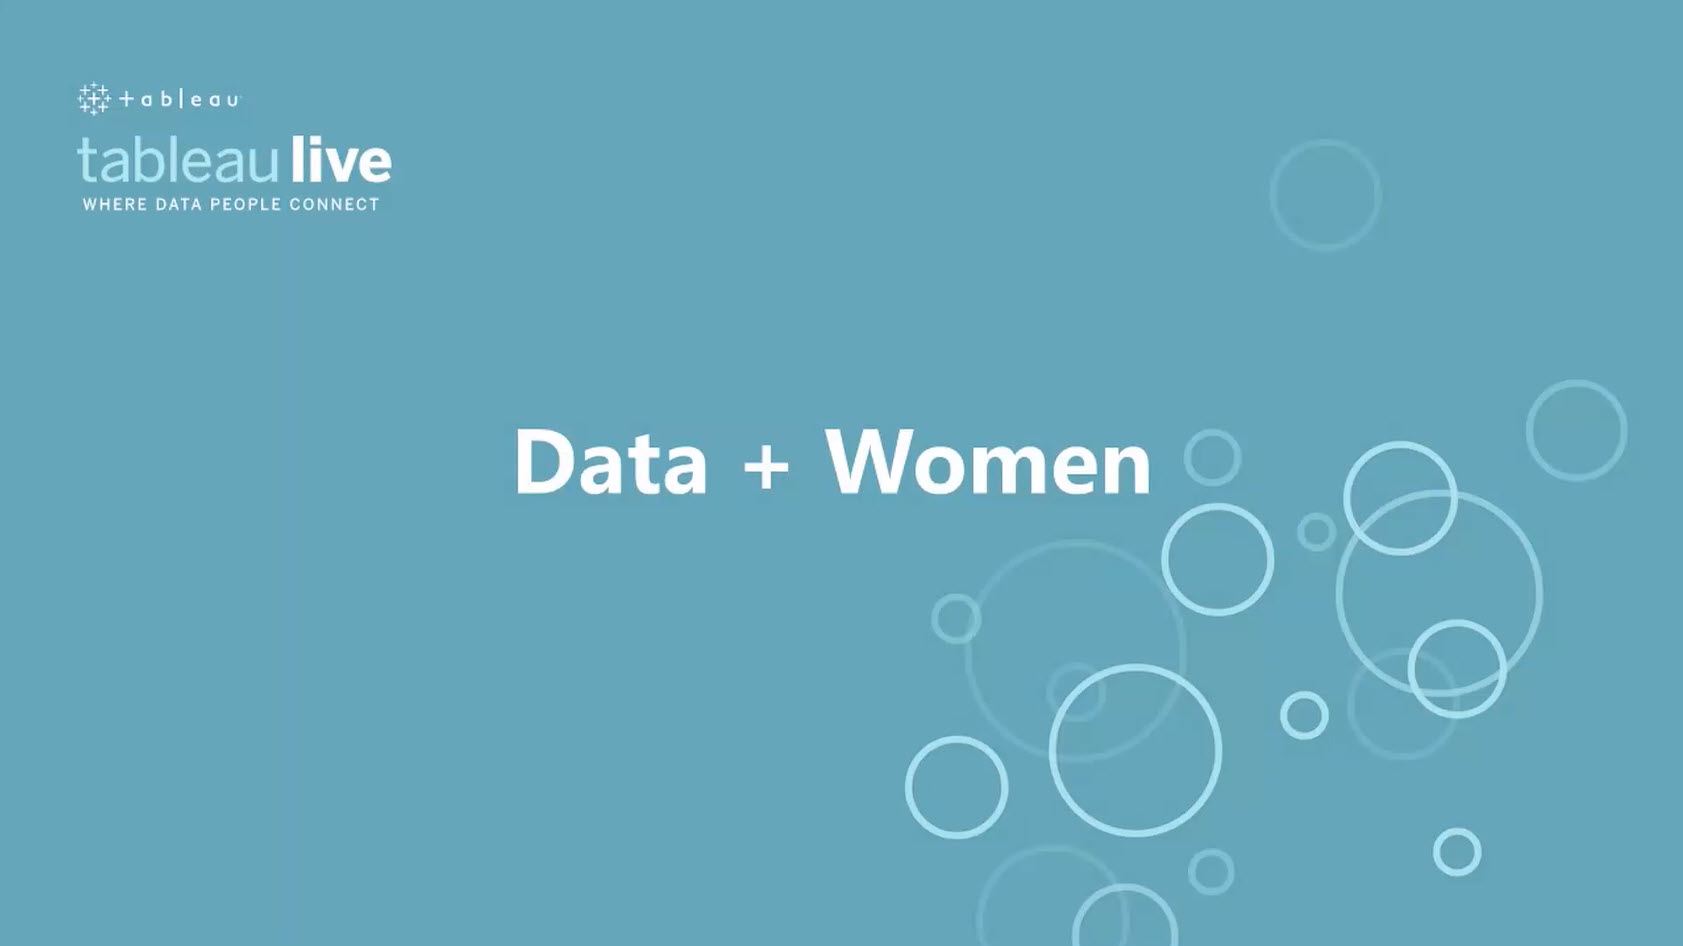 Navigate to Data + Women